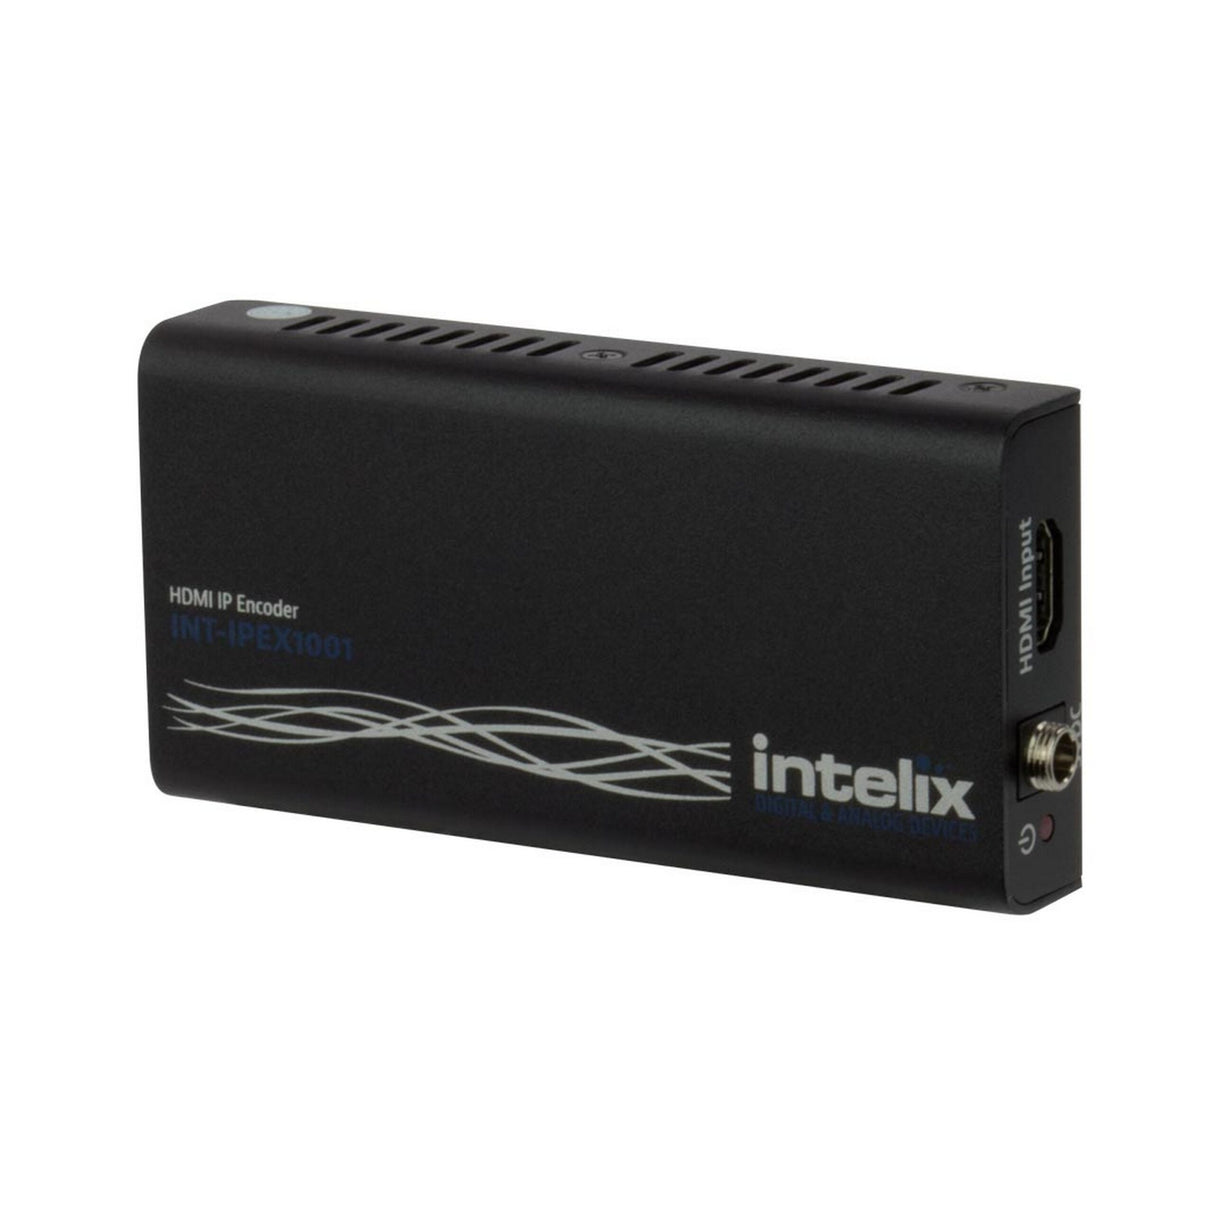 Intelix INT-IPEX1001 HDMI Over IP Encoder, MJPEG